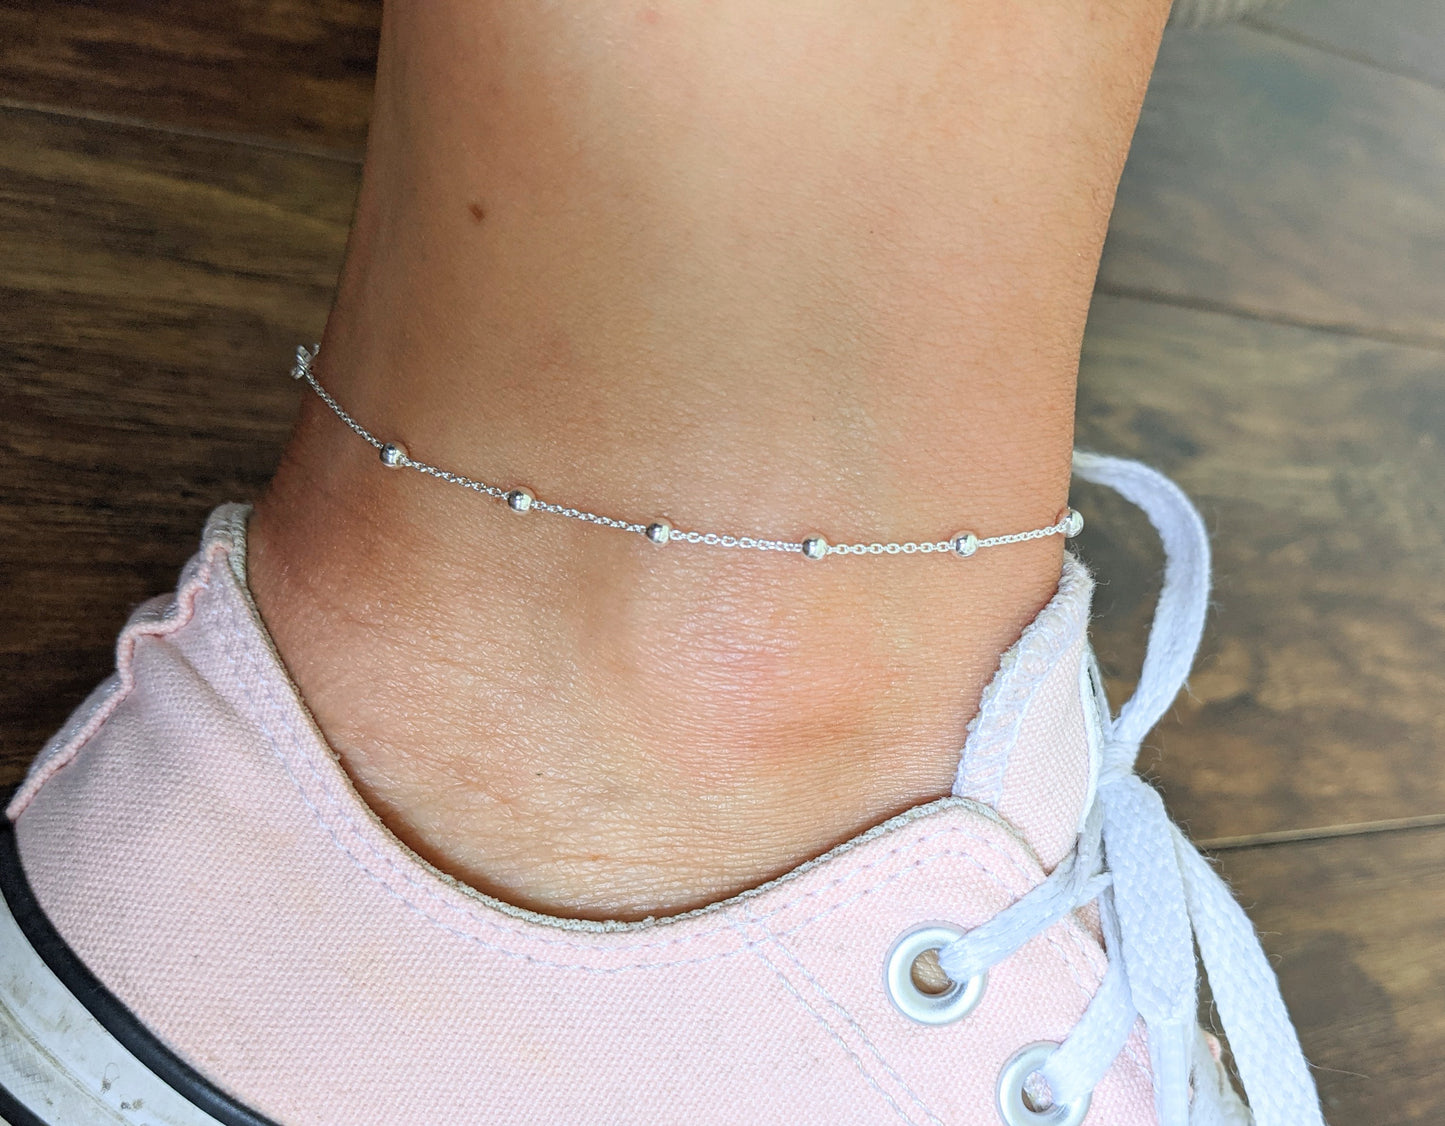 Satellite Bead Anklet - With Love Jewellery UK